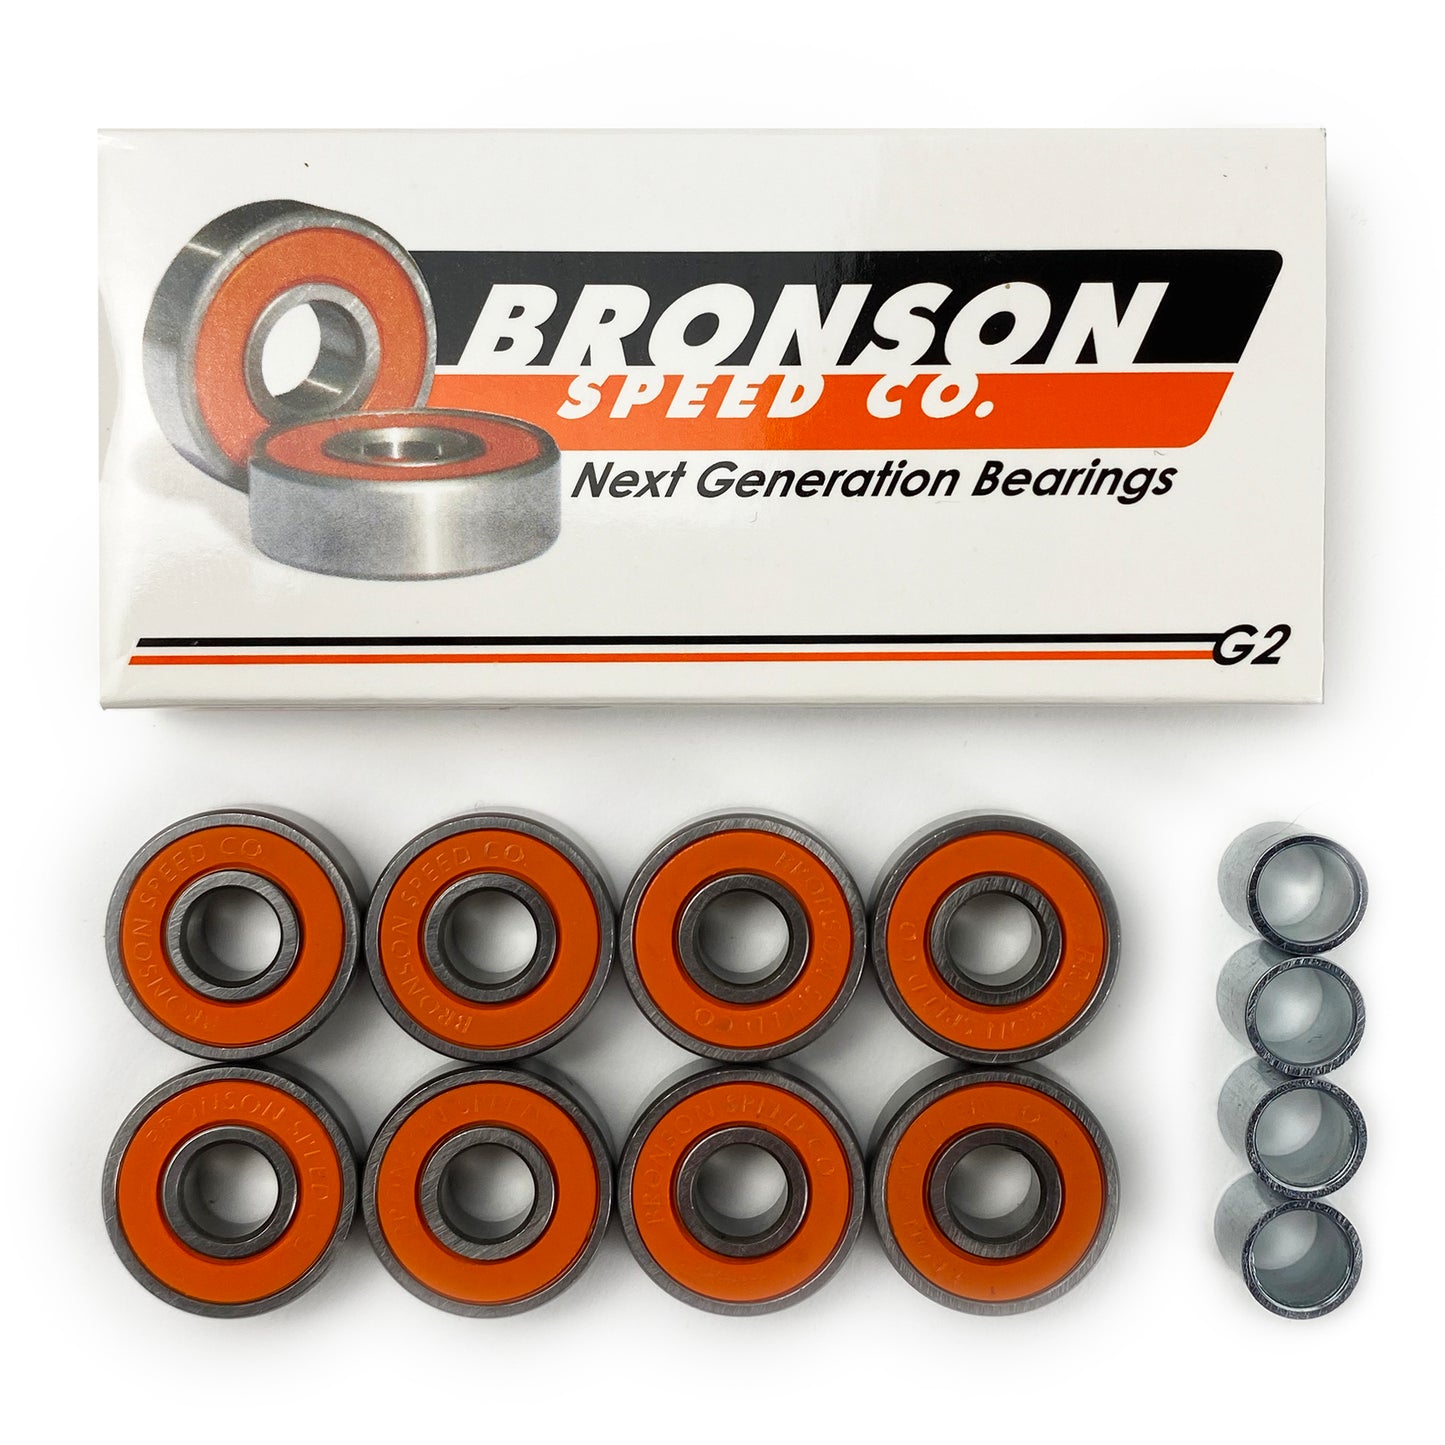 Bronson Speed Co. Bearings G2 (Pack of 8) - Prime Delux Store